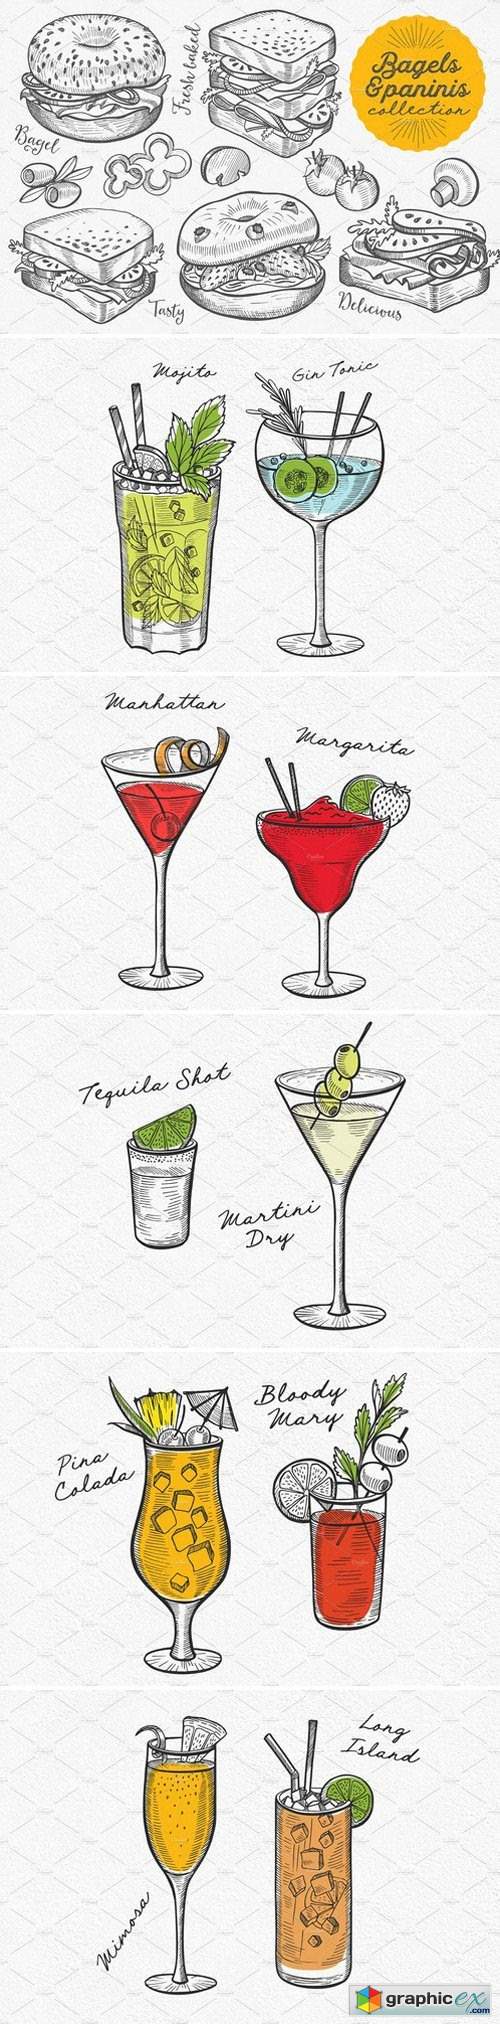 Food & Drink Illustrations